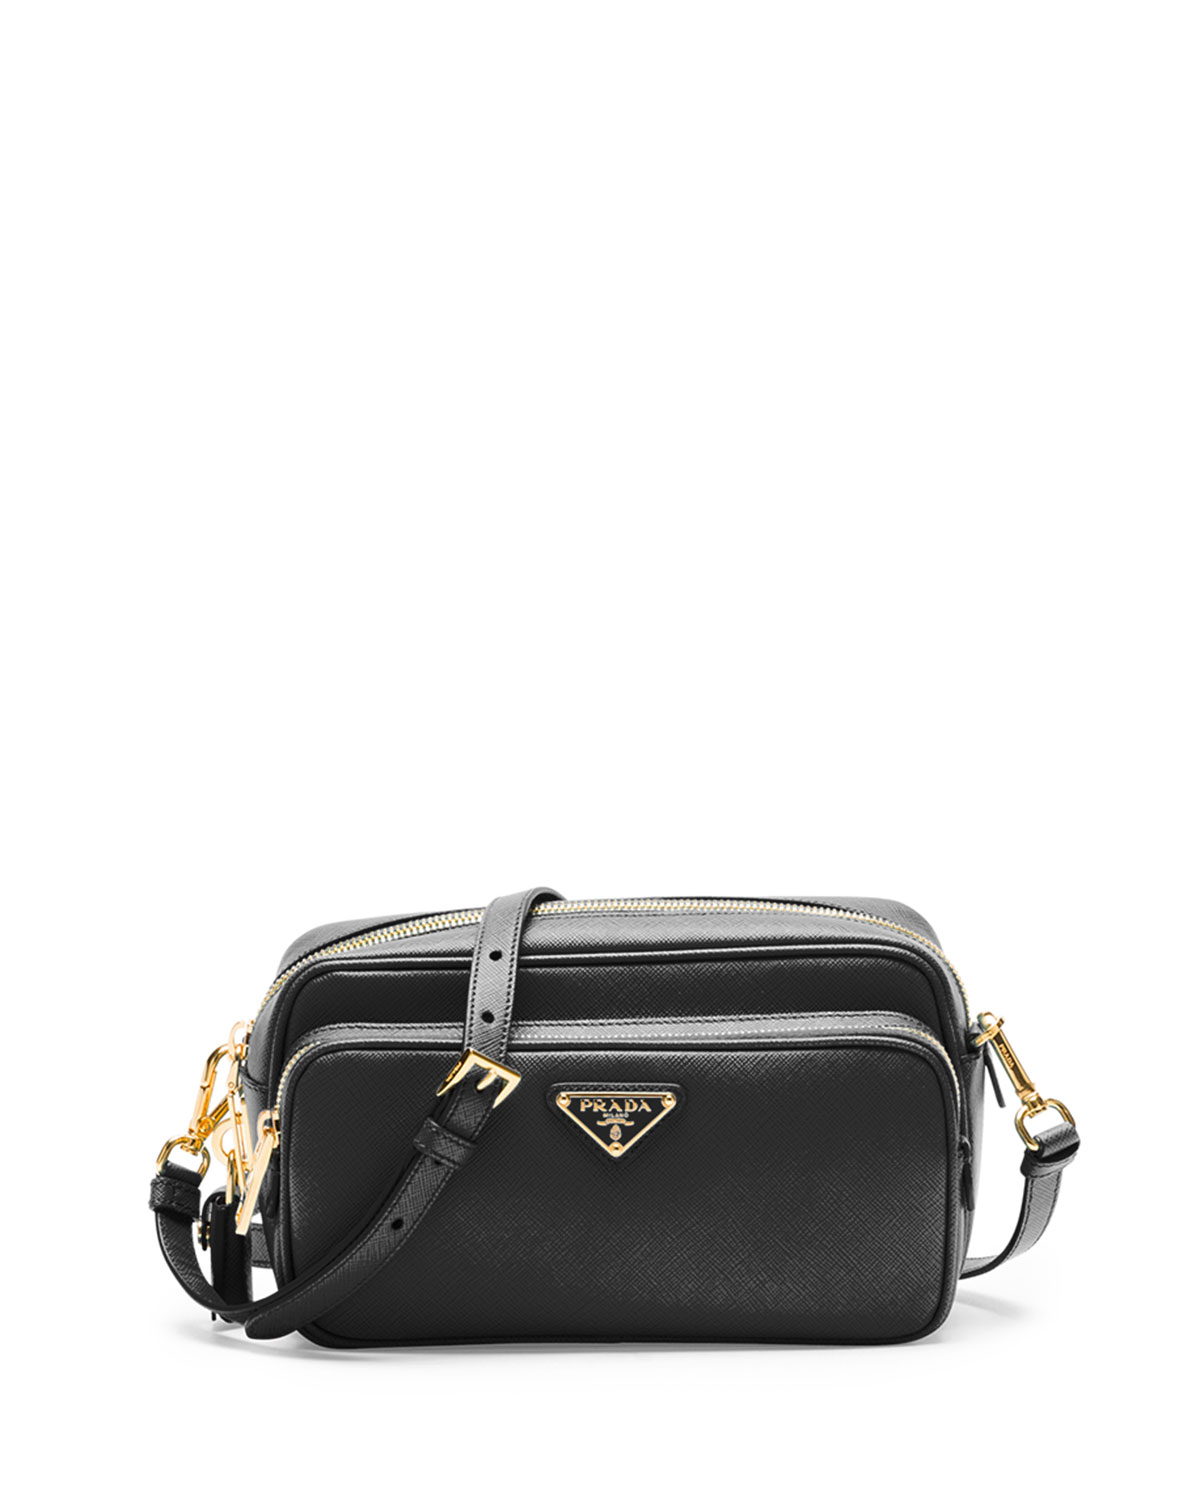 Lyst - Prada Saffiano Mini Crossbody Bag in Black